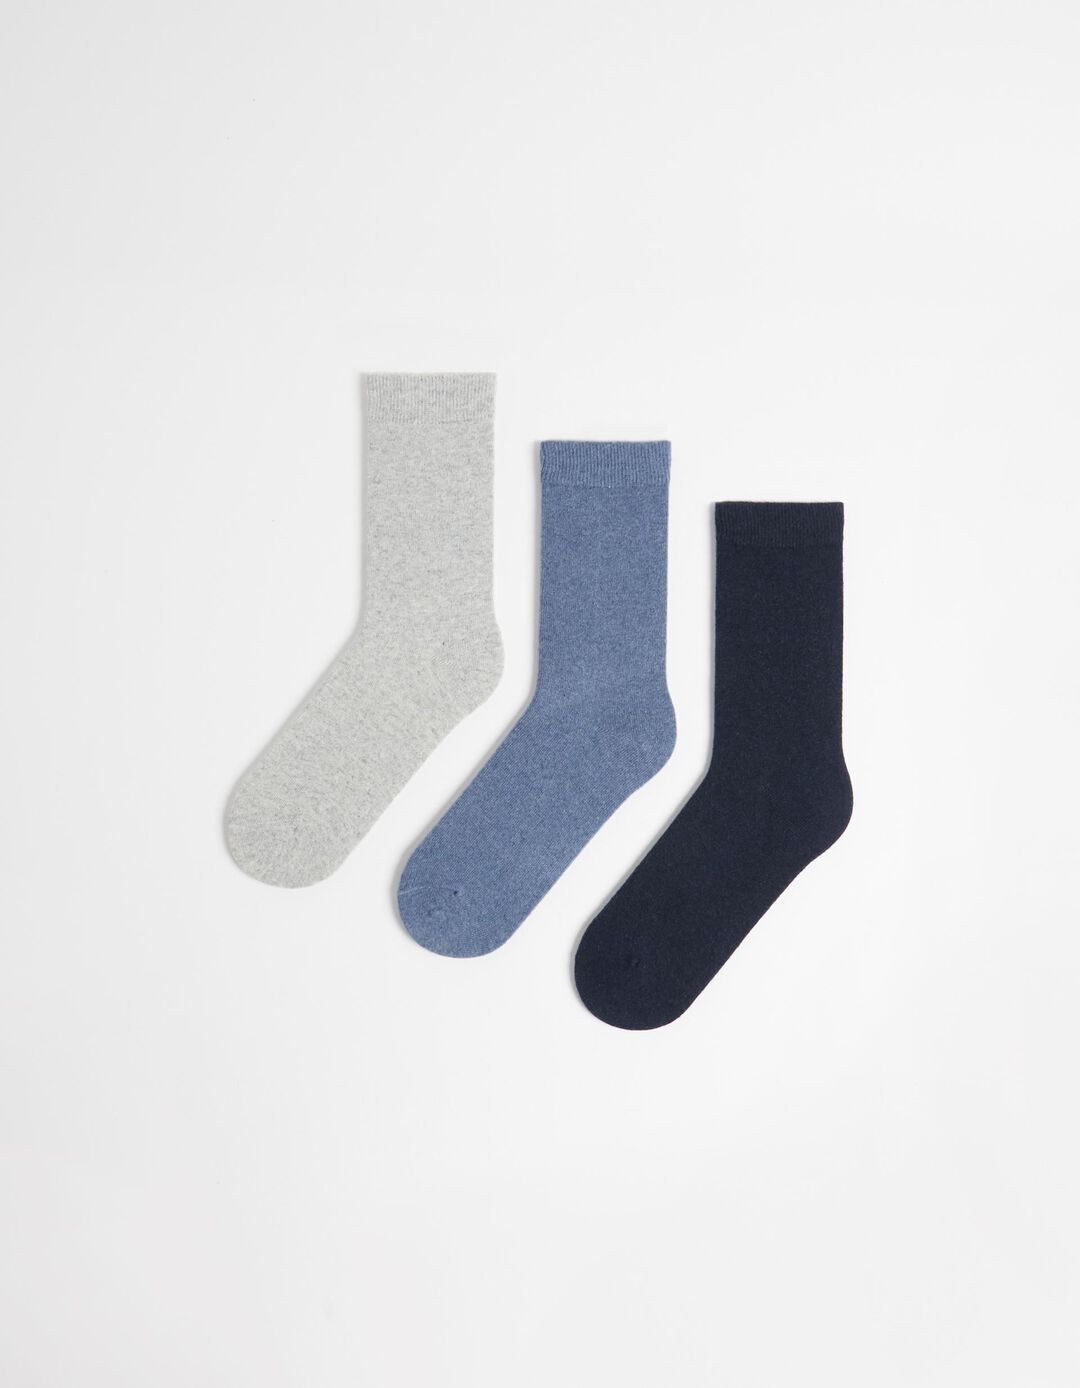 Pack 3 Pairs of Plain Socks Wool Blend, Men, Multicolor